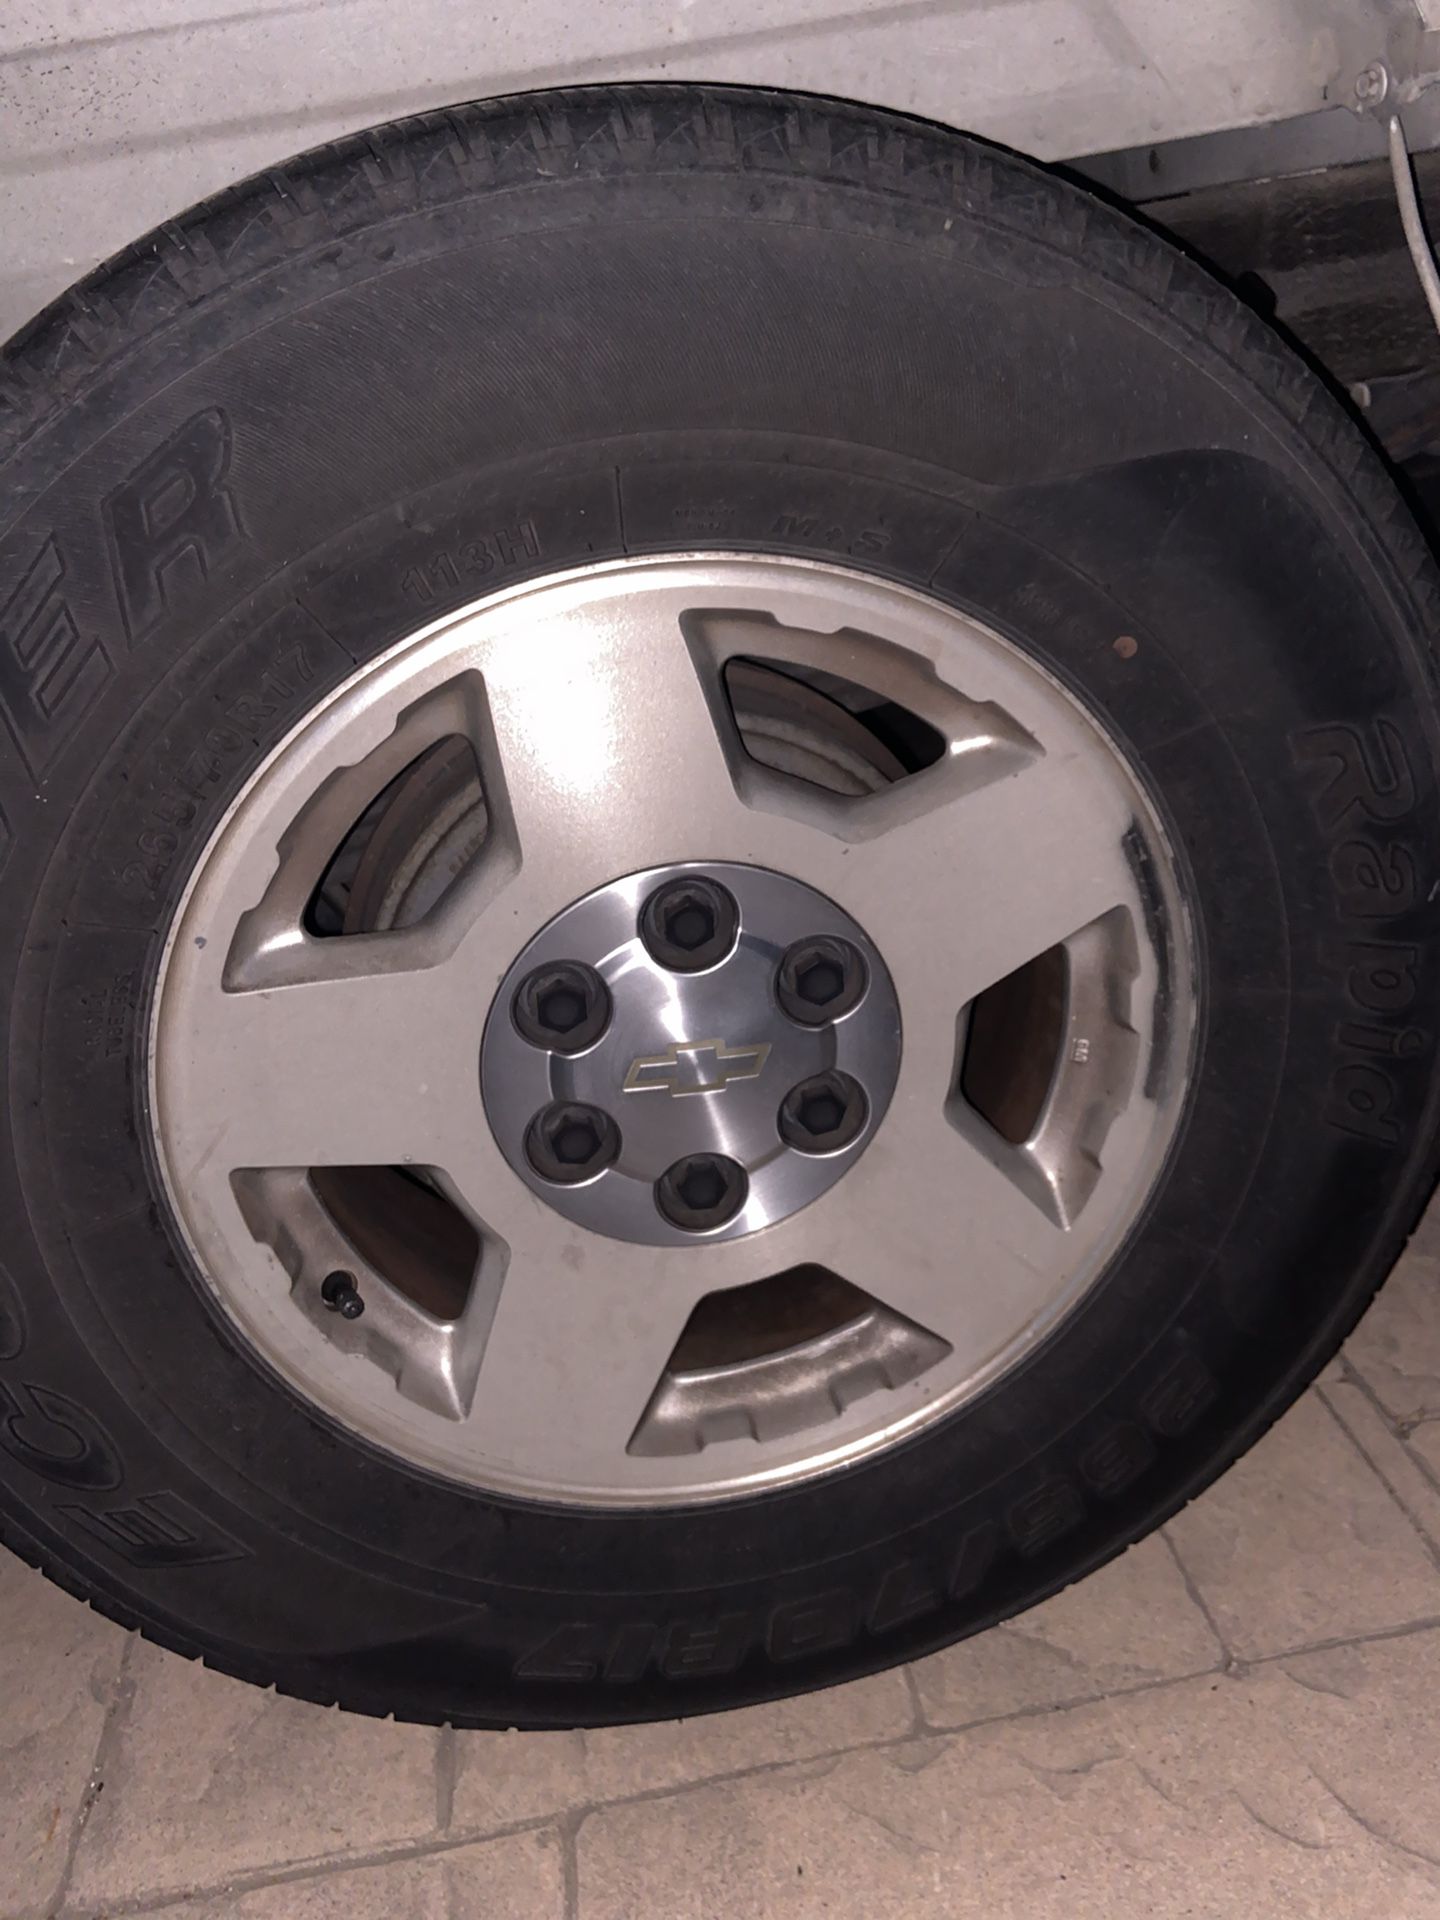 Chevy rims wheels tires 6 lugs